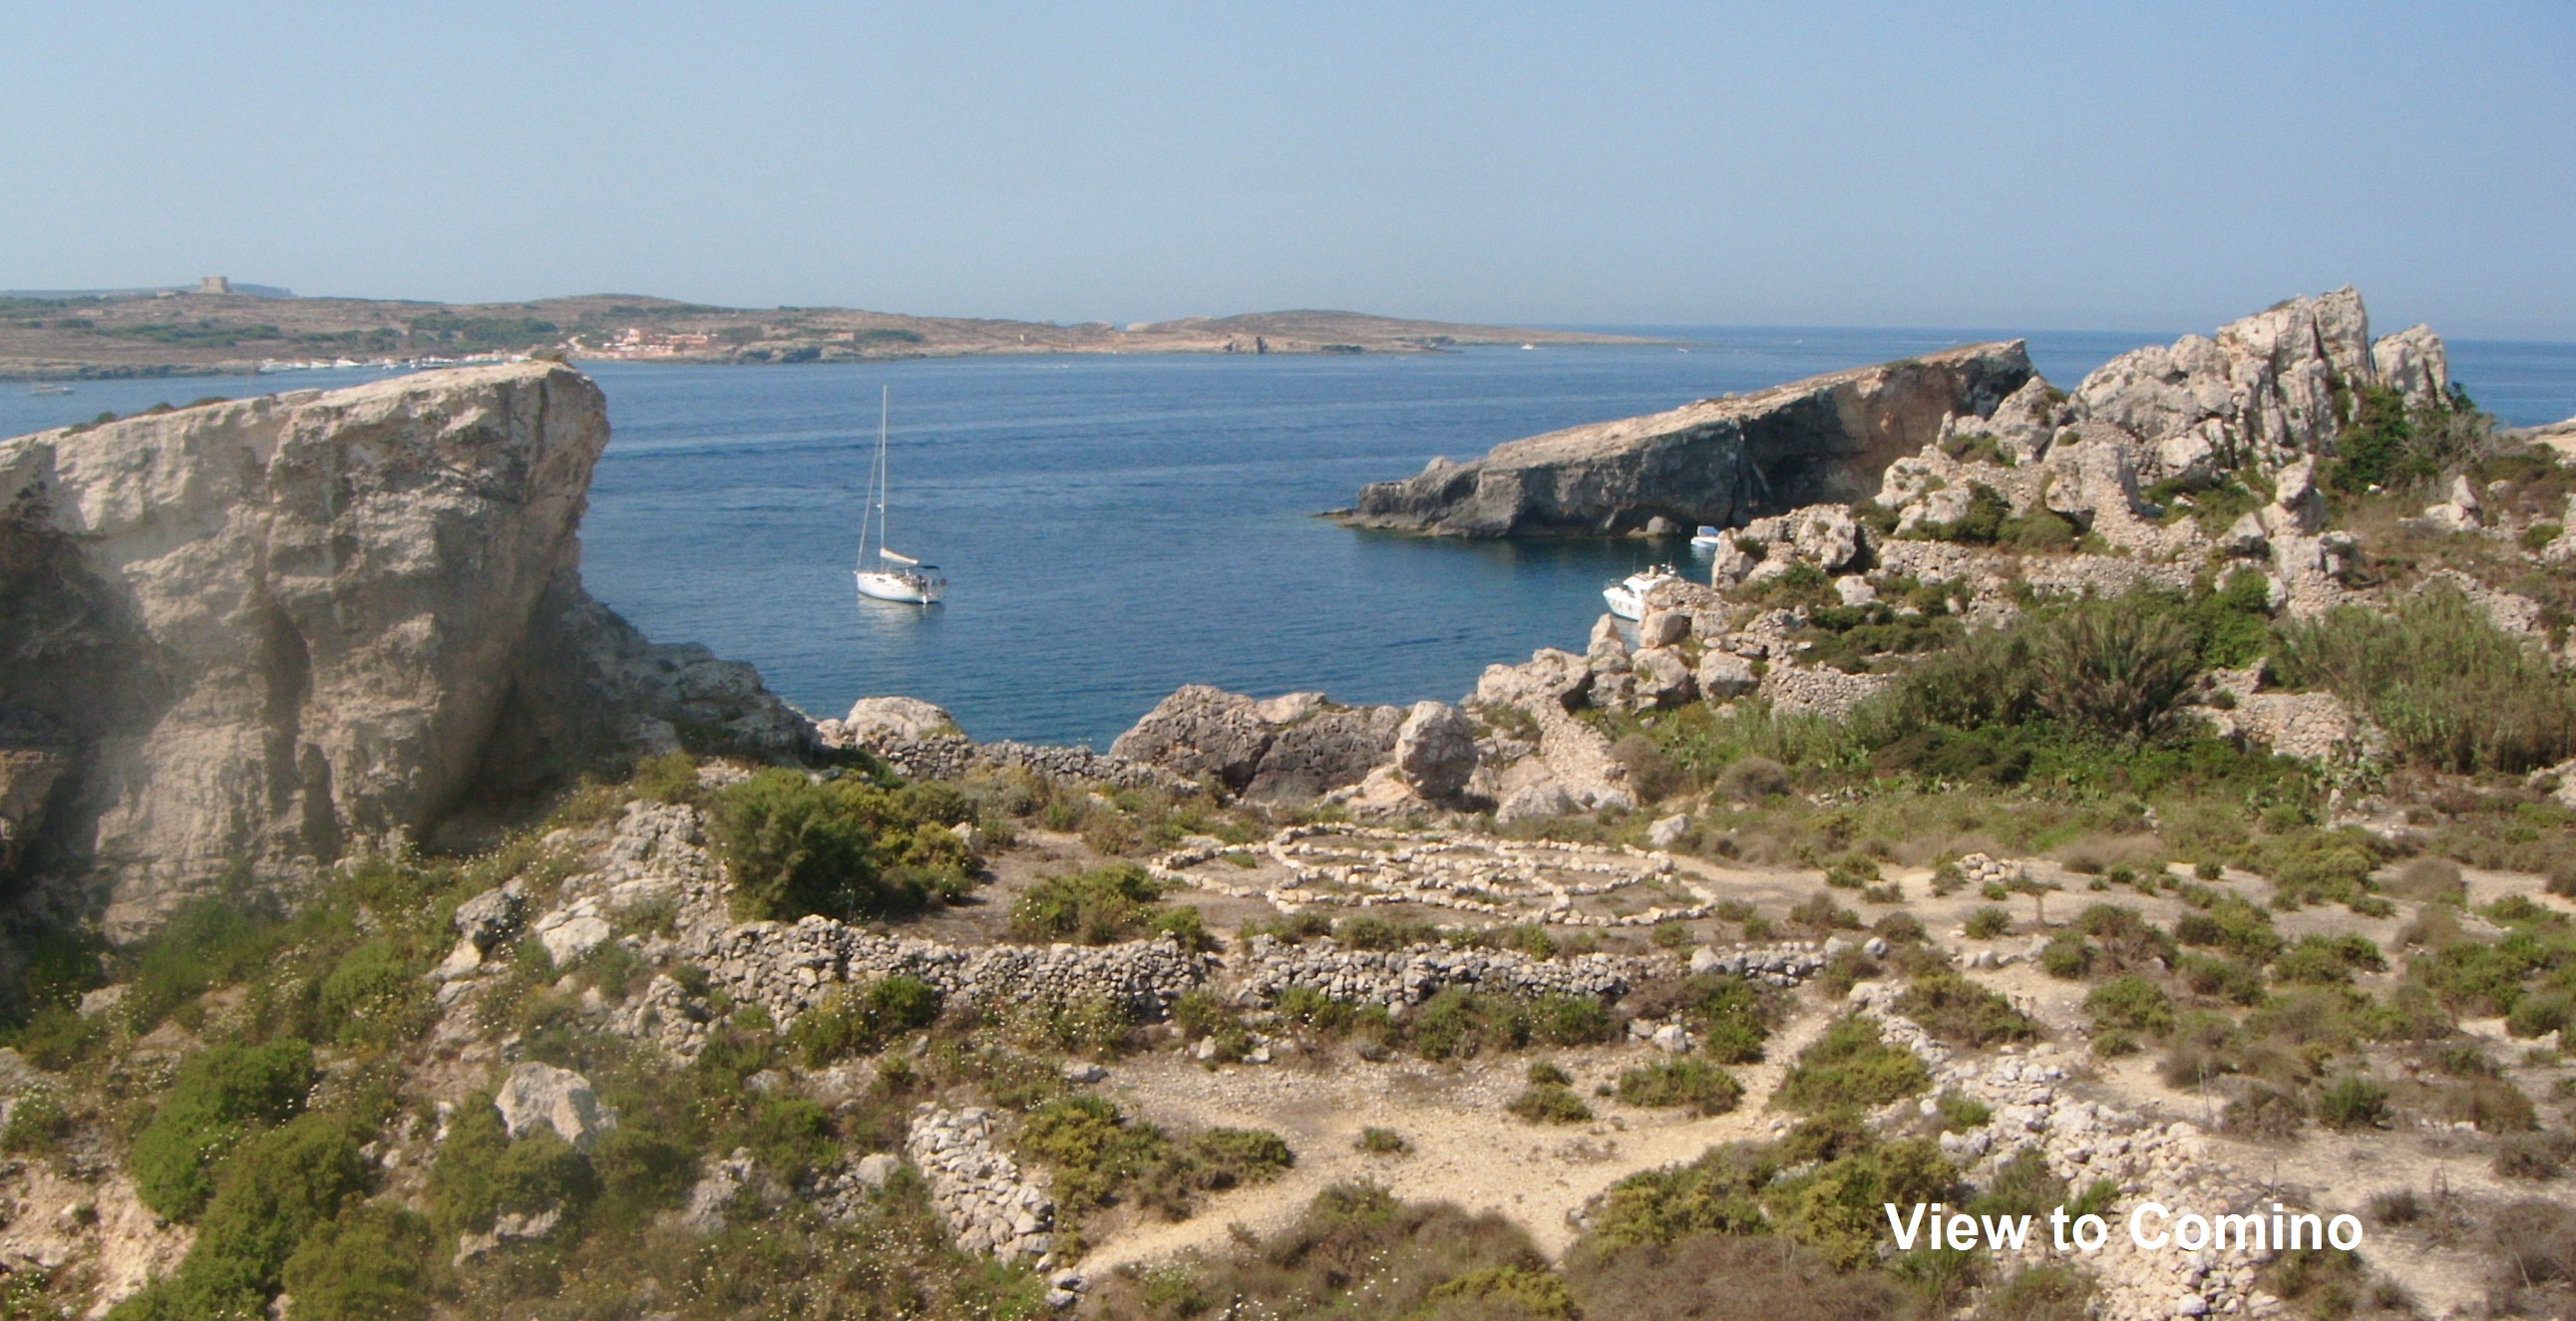 Malta, Gozo Coastal Walk, Vioew to Comino, Walkopedia